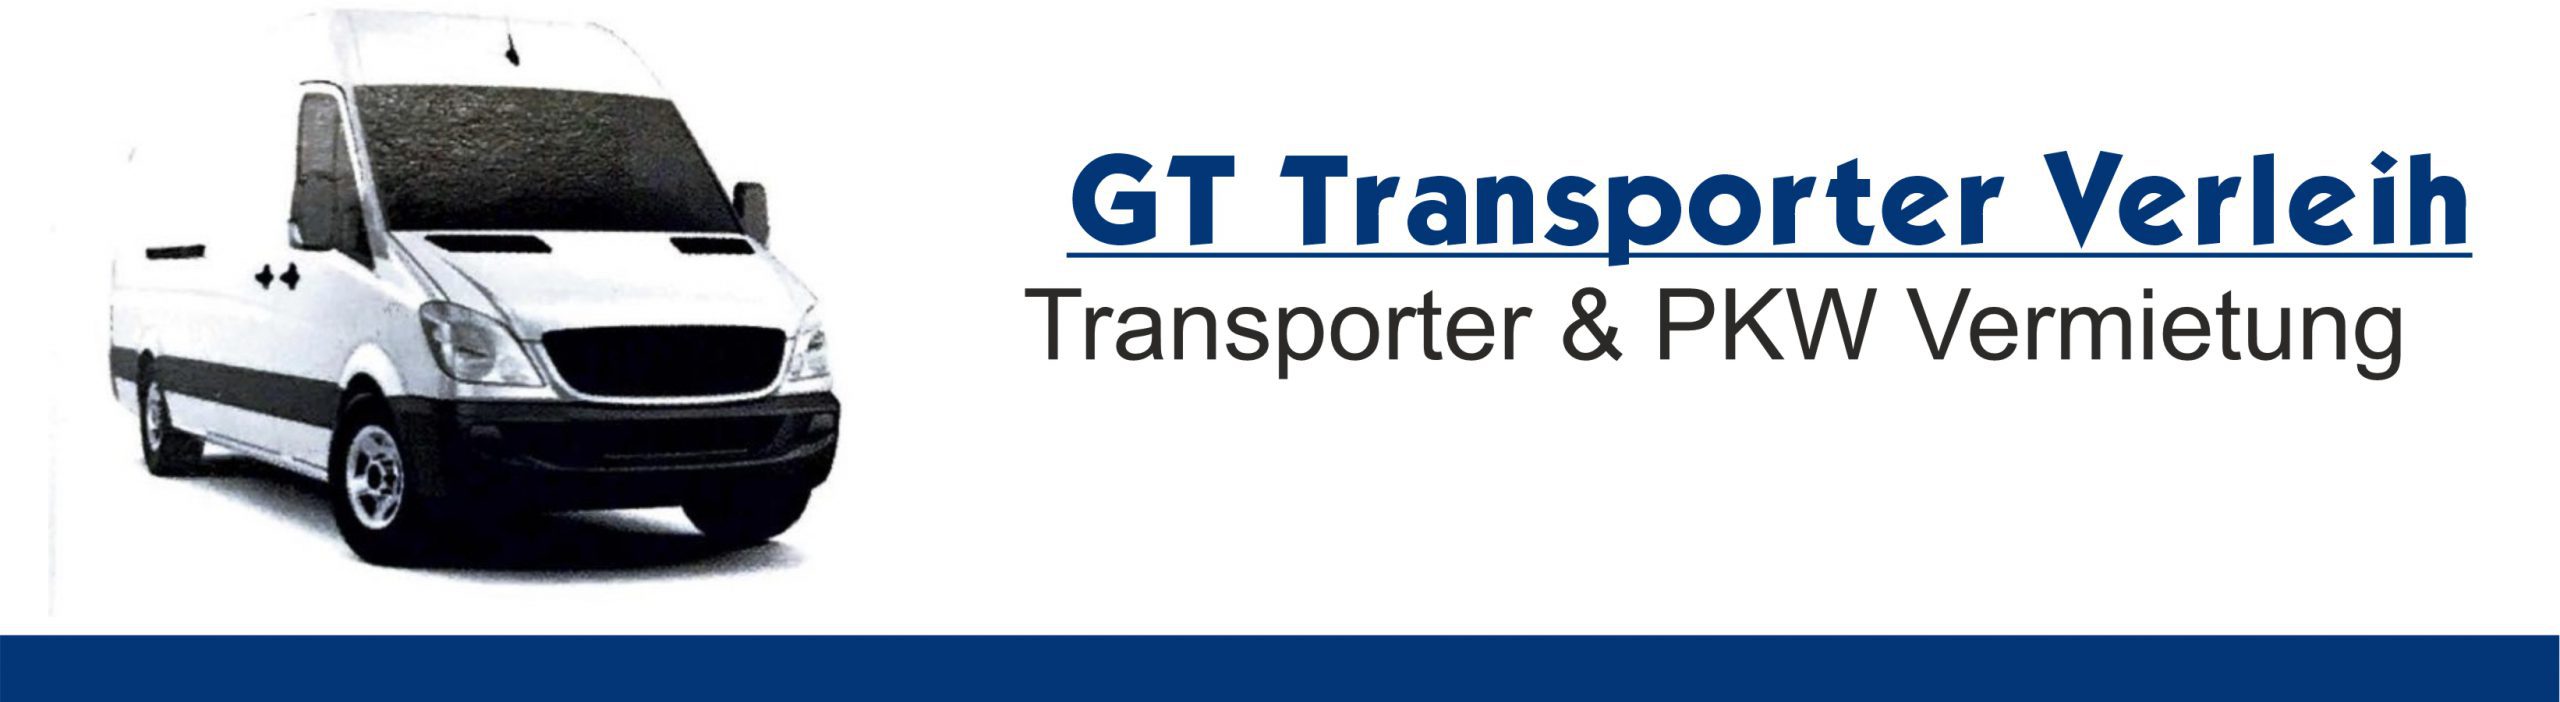 GT Transporter Verleih